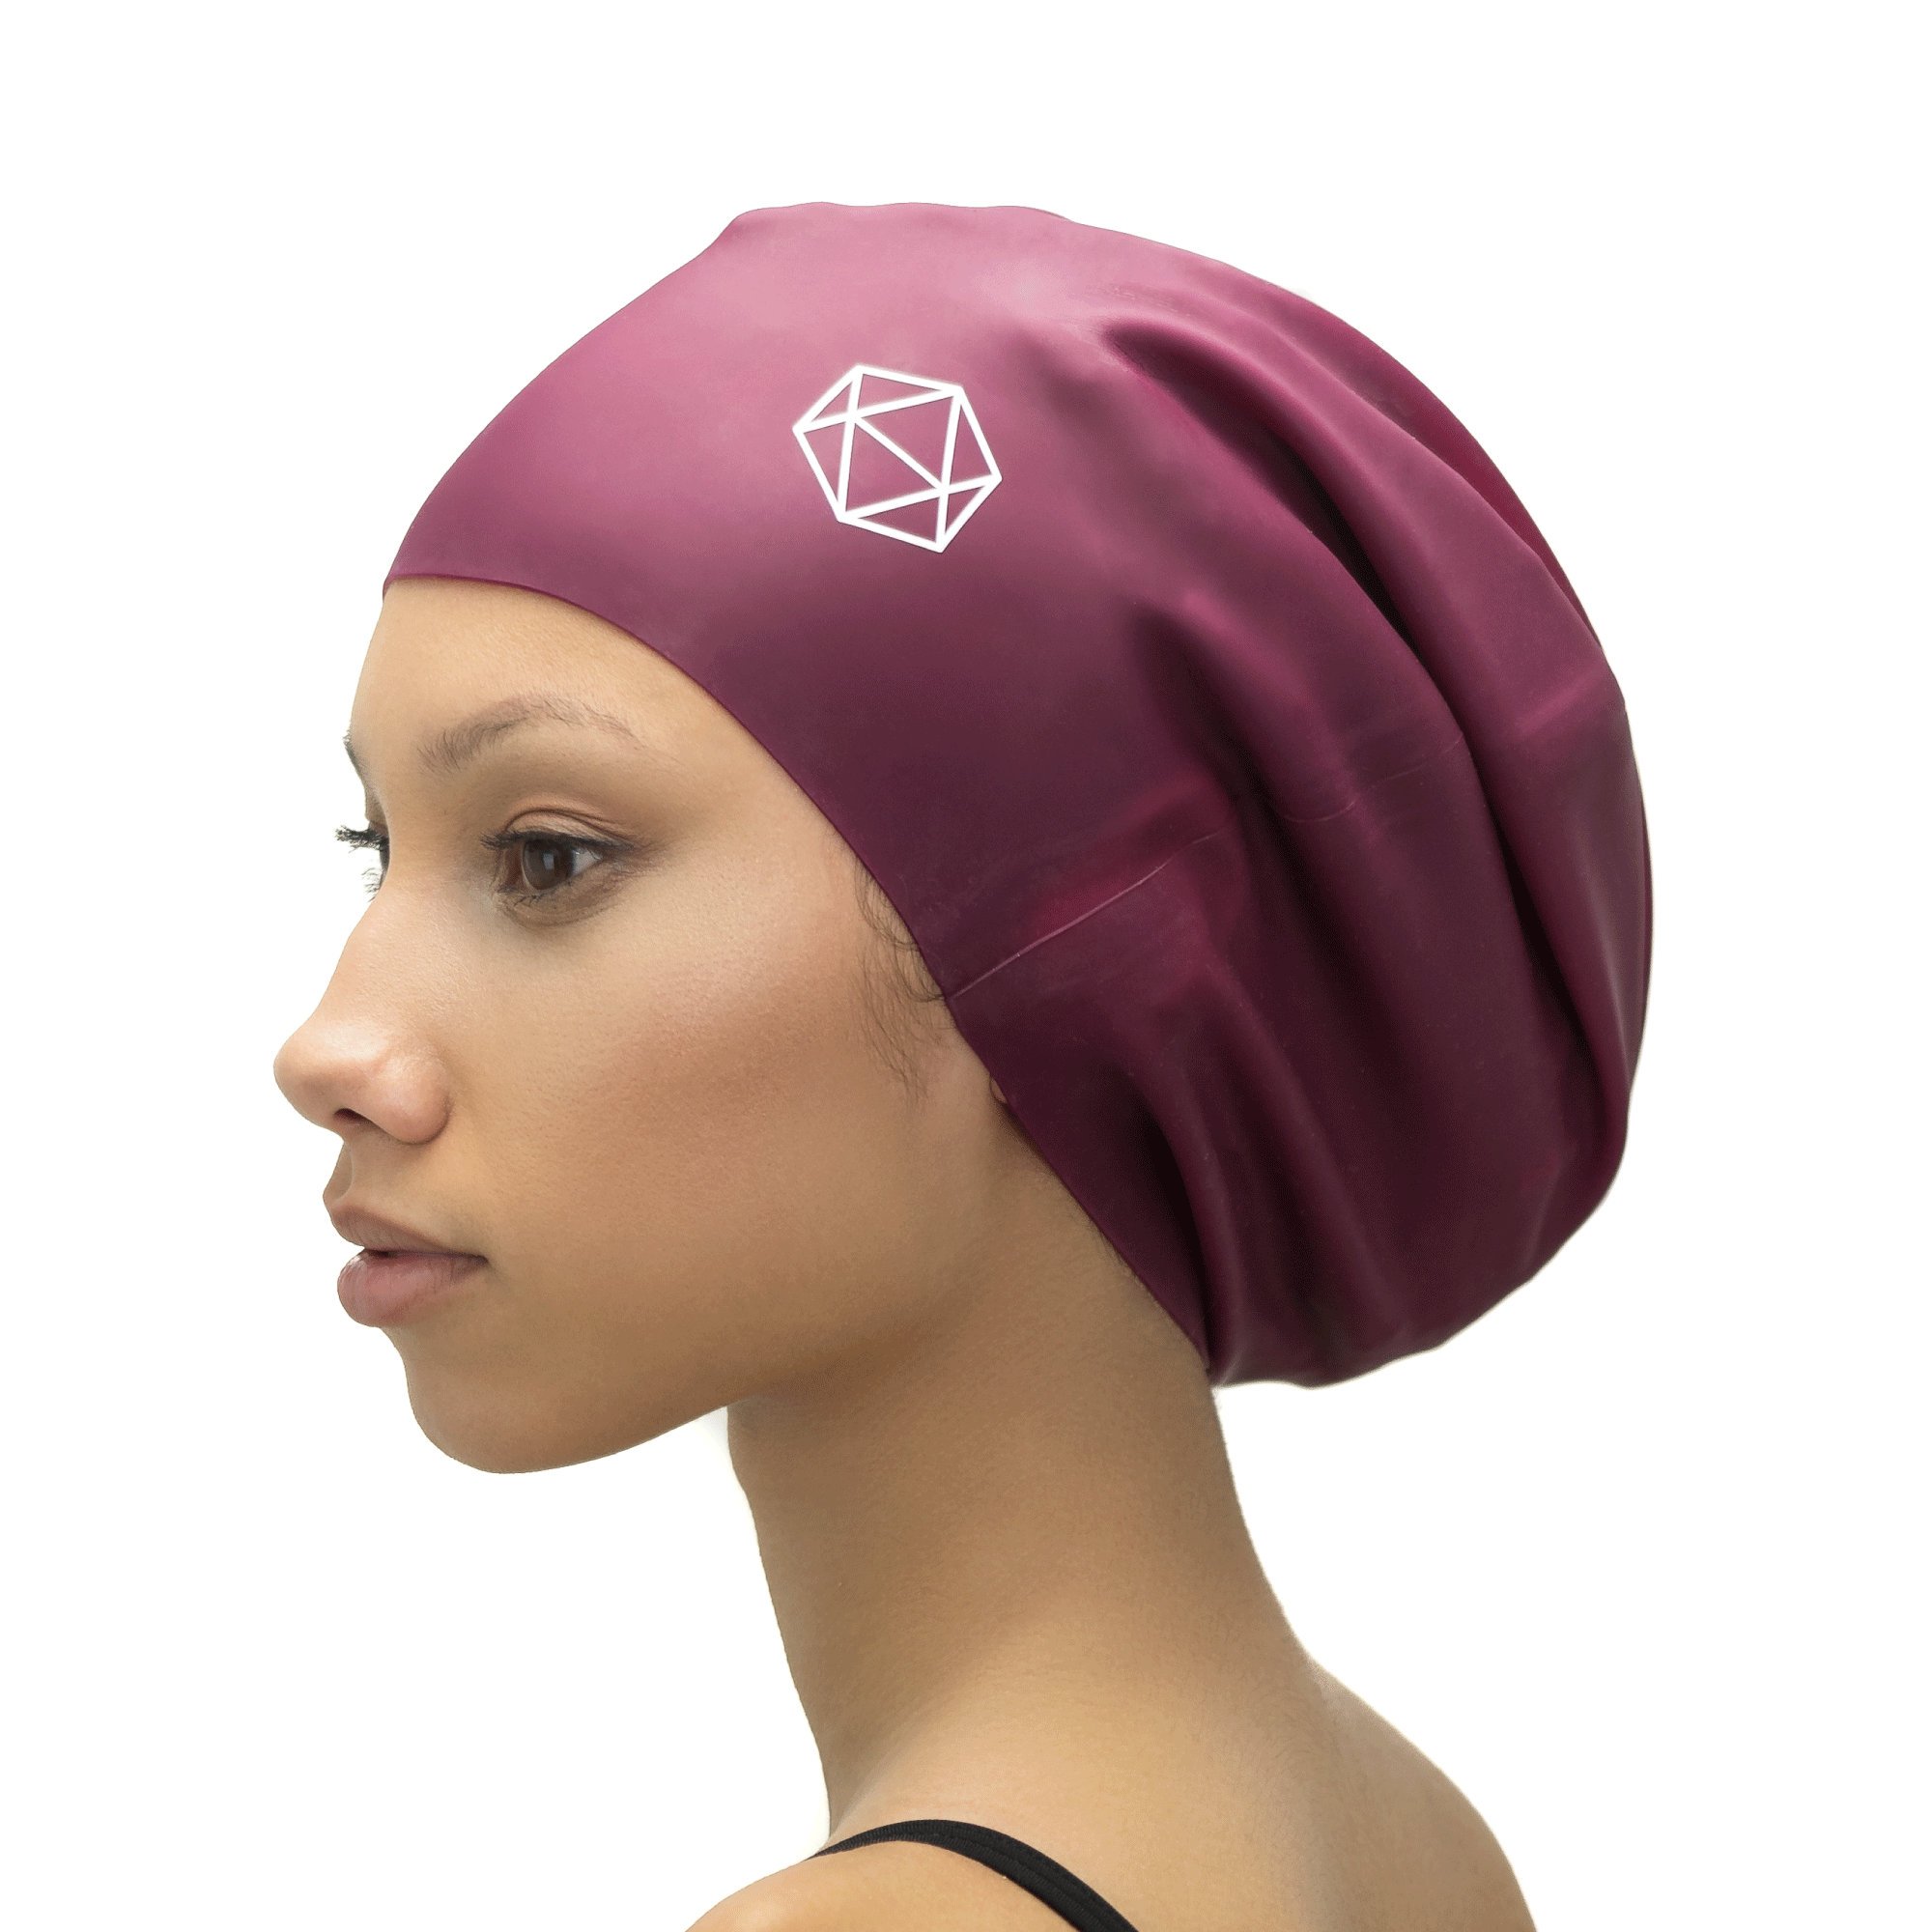 XL Swim Cap for Locs - Buy bathing cap bathing hats for dreadlocks Dreads Afros Rastazoepfe Extensions Braids online